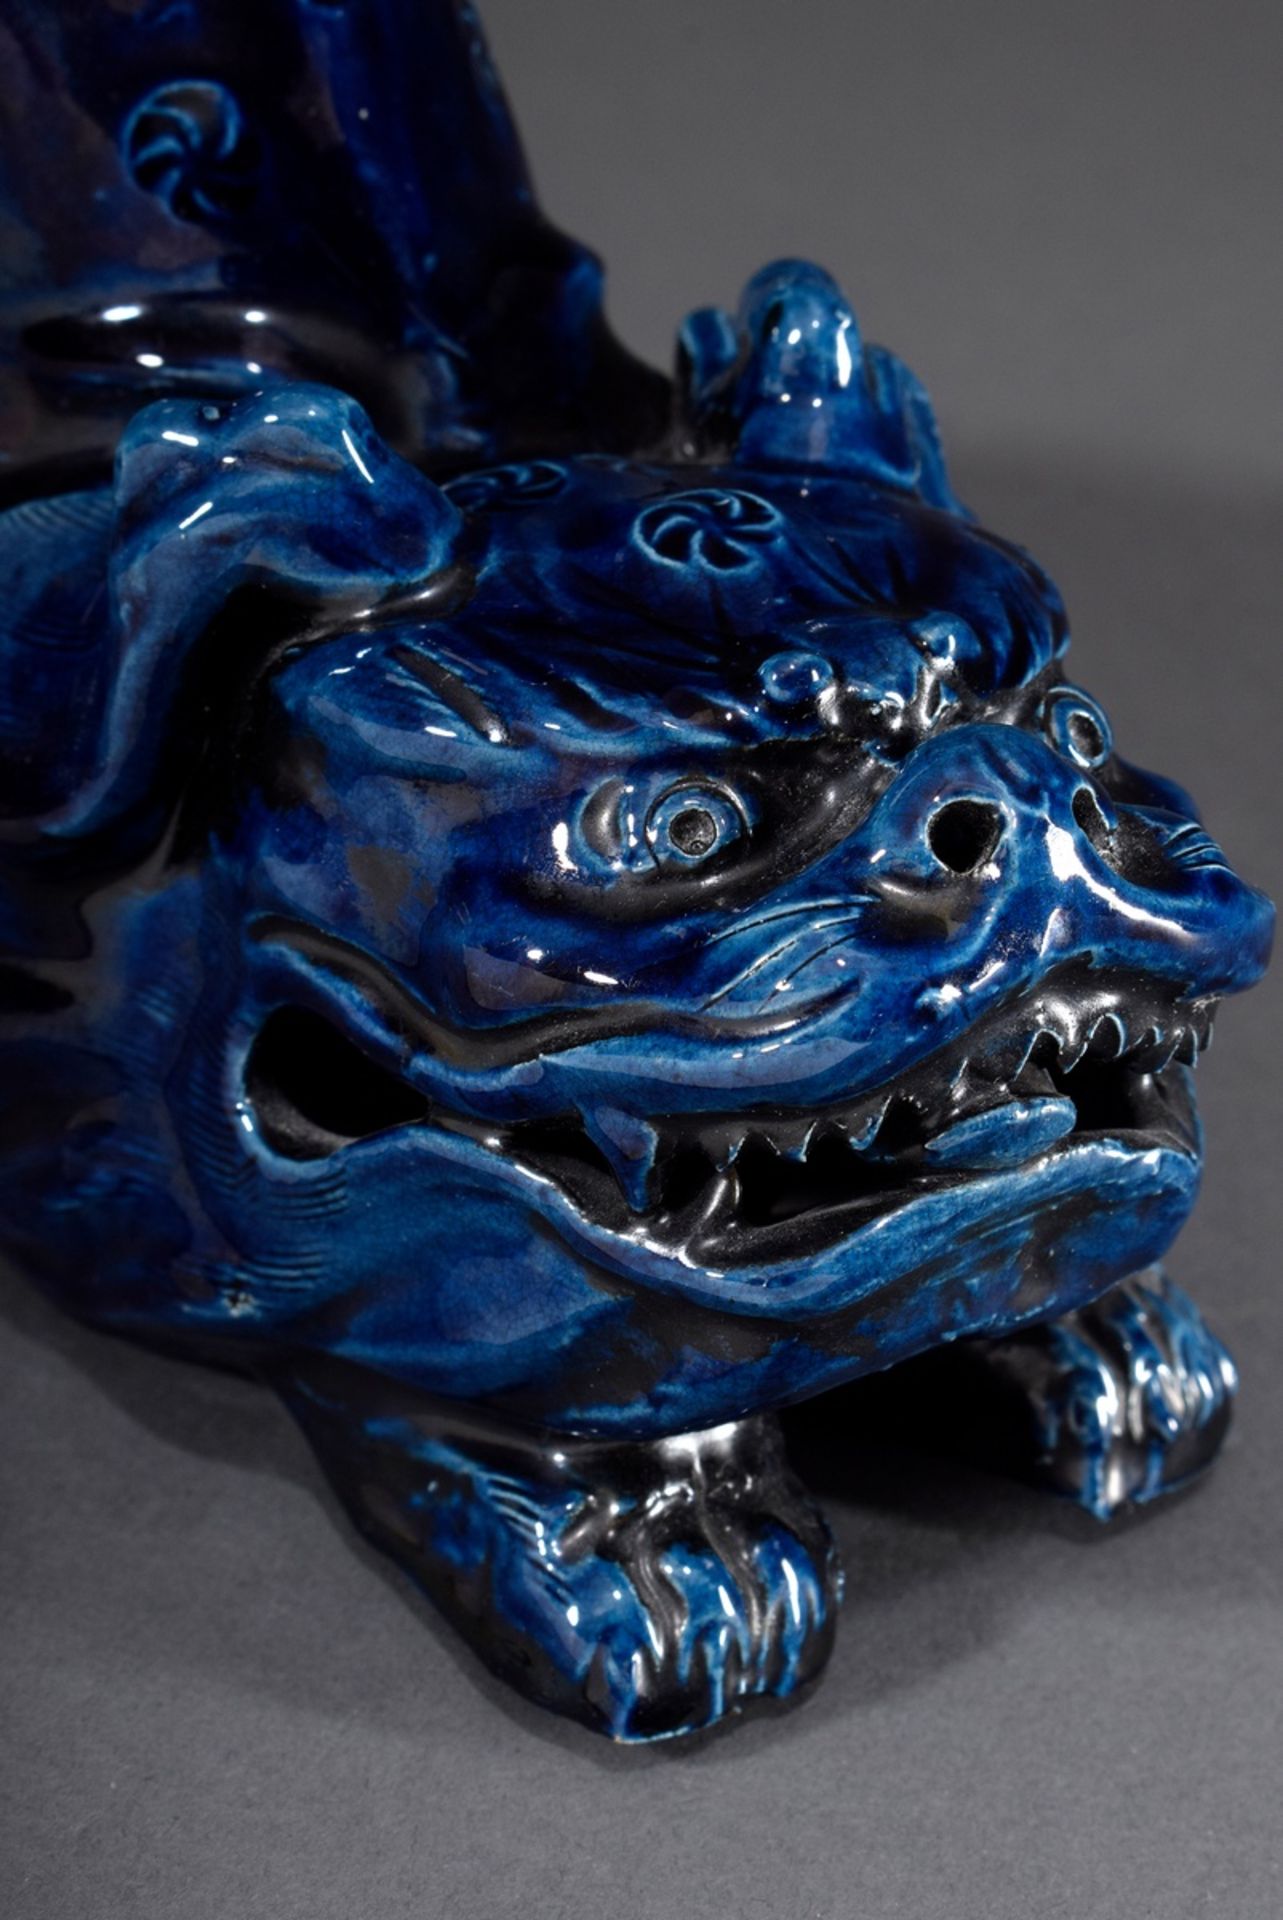 Chinesische Keramik "Spielender Shishi" mit blau | Chinese pottery "Playing Shishi" with blue/black - Bild 3 aus 5